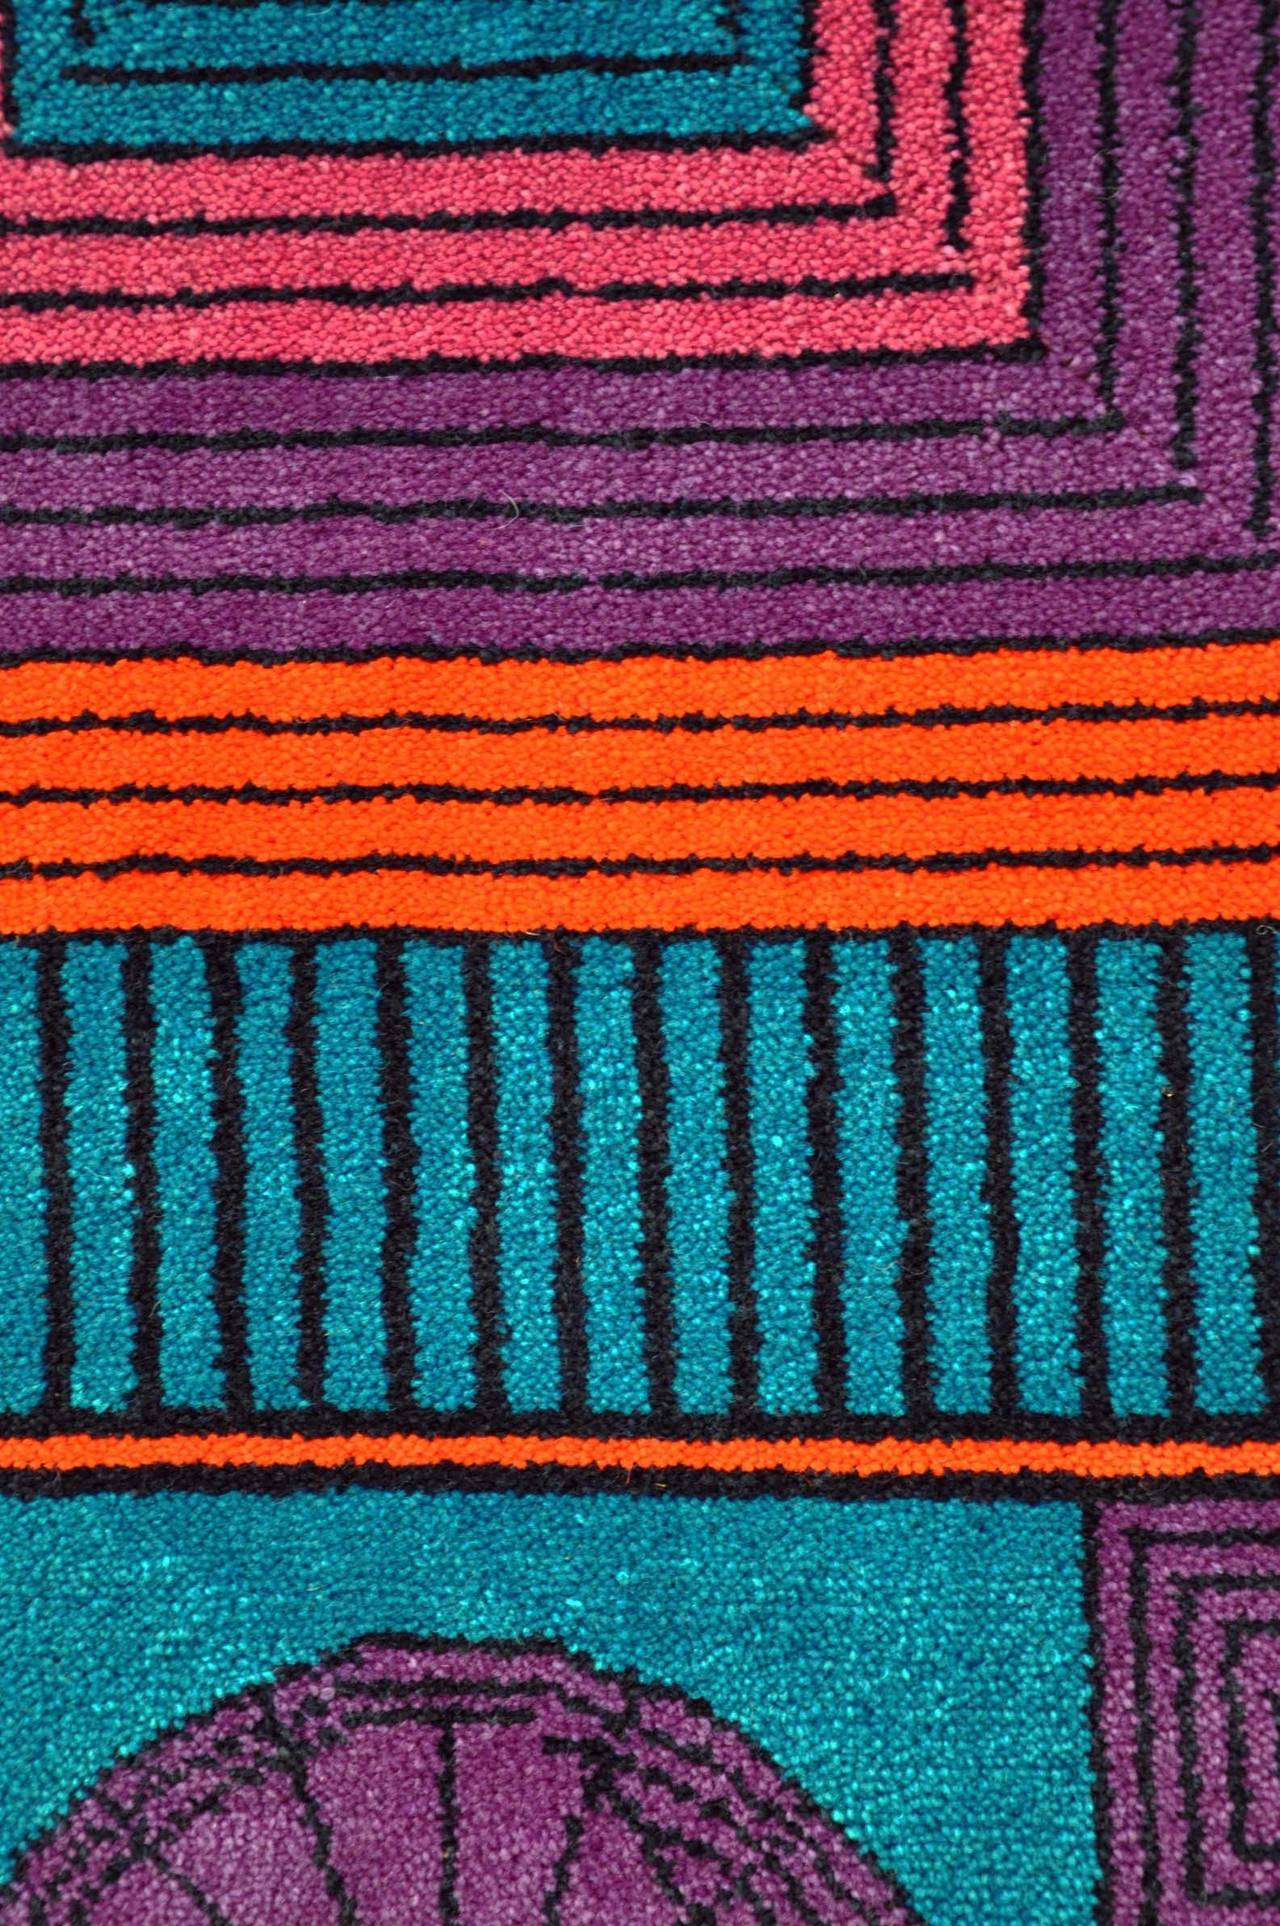 Woven Pierre Cardin, Signed Wool Tapestry